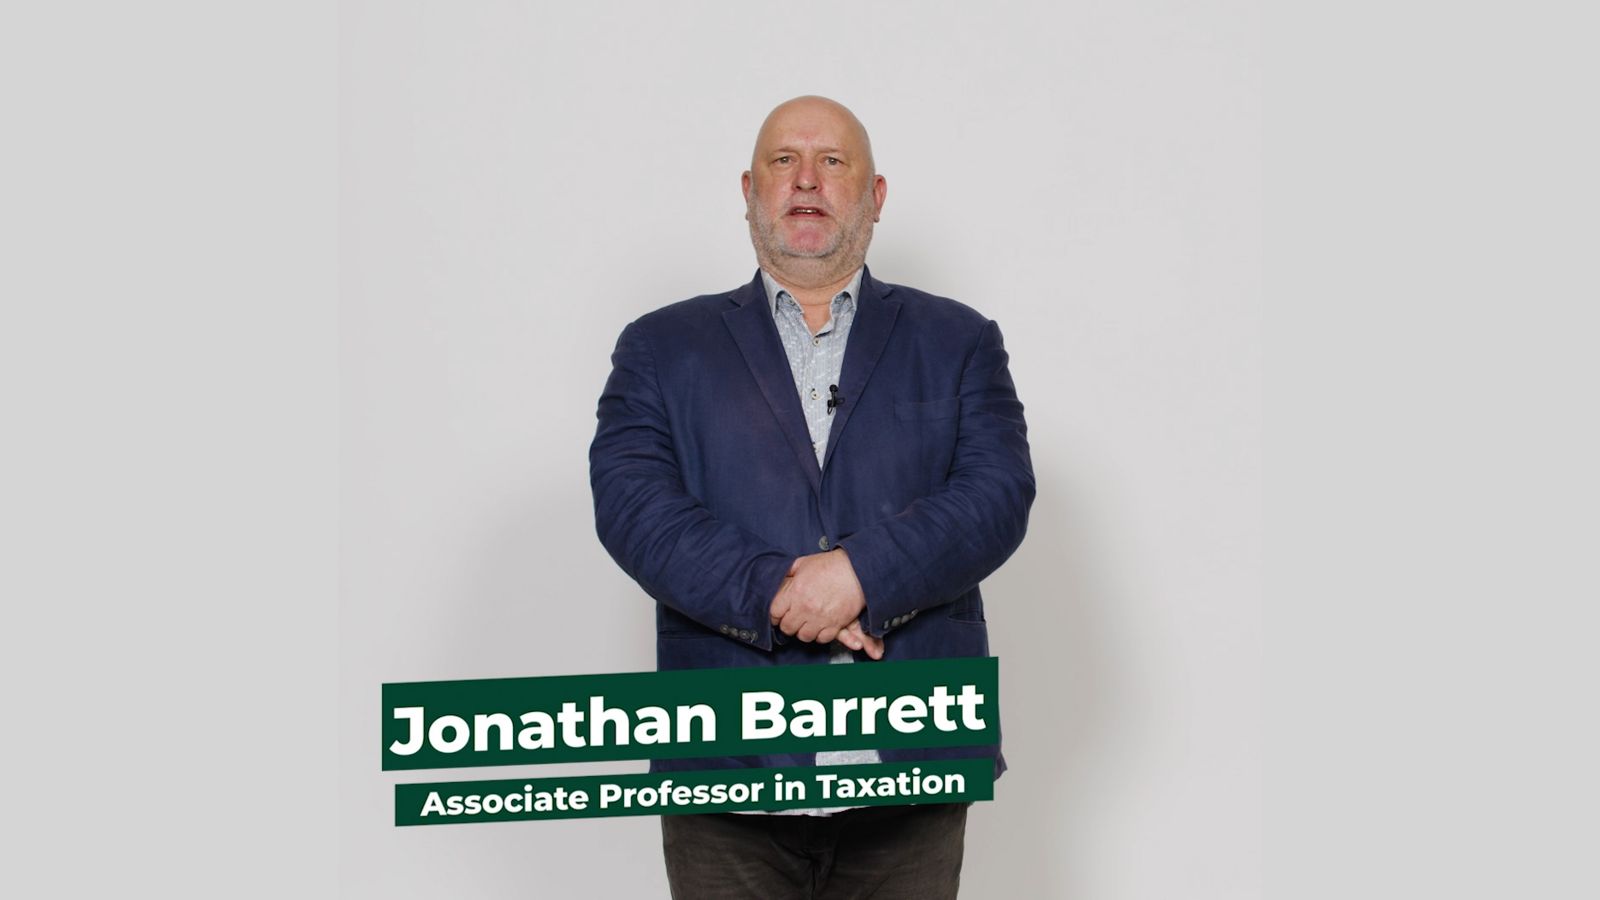 Associate Professor Jonathan Barrett stands facing the camera against a white background